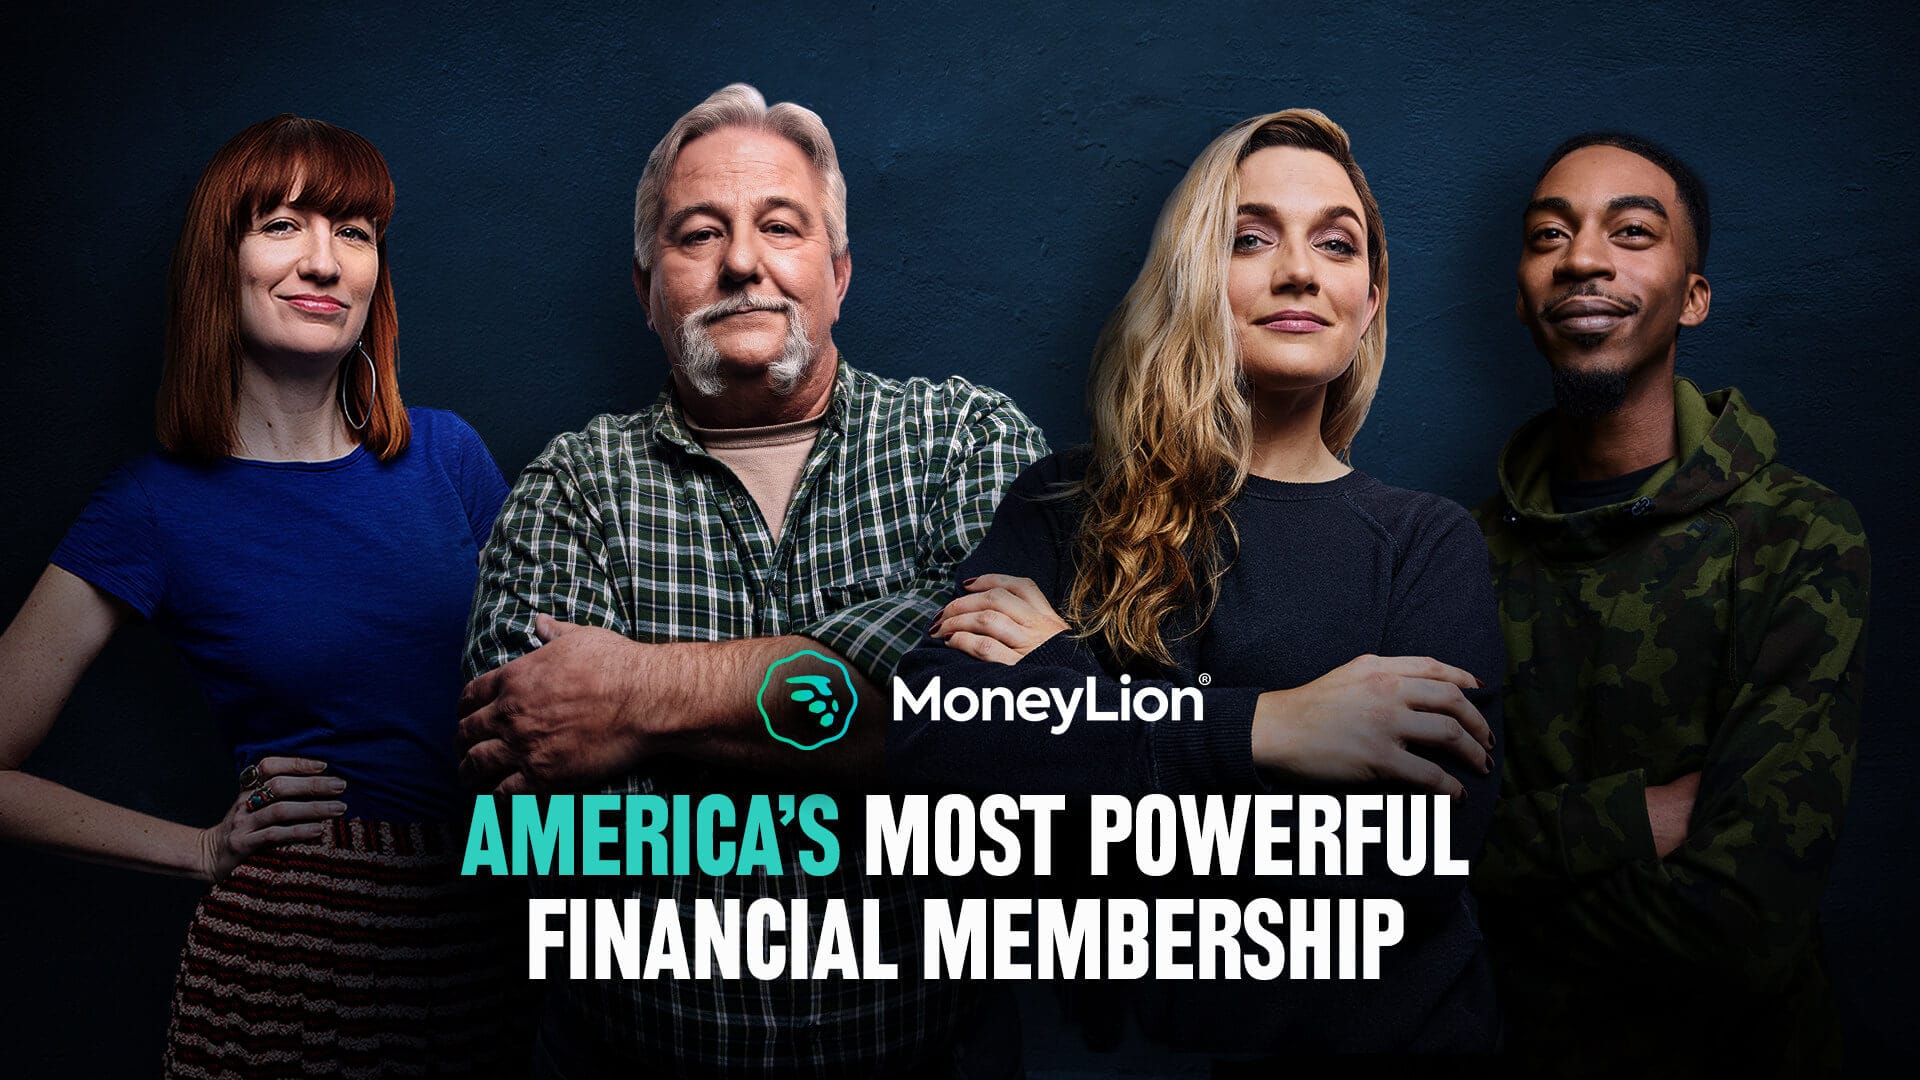 MoneyLion, America's most powerful financial membership.